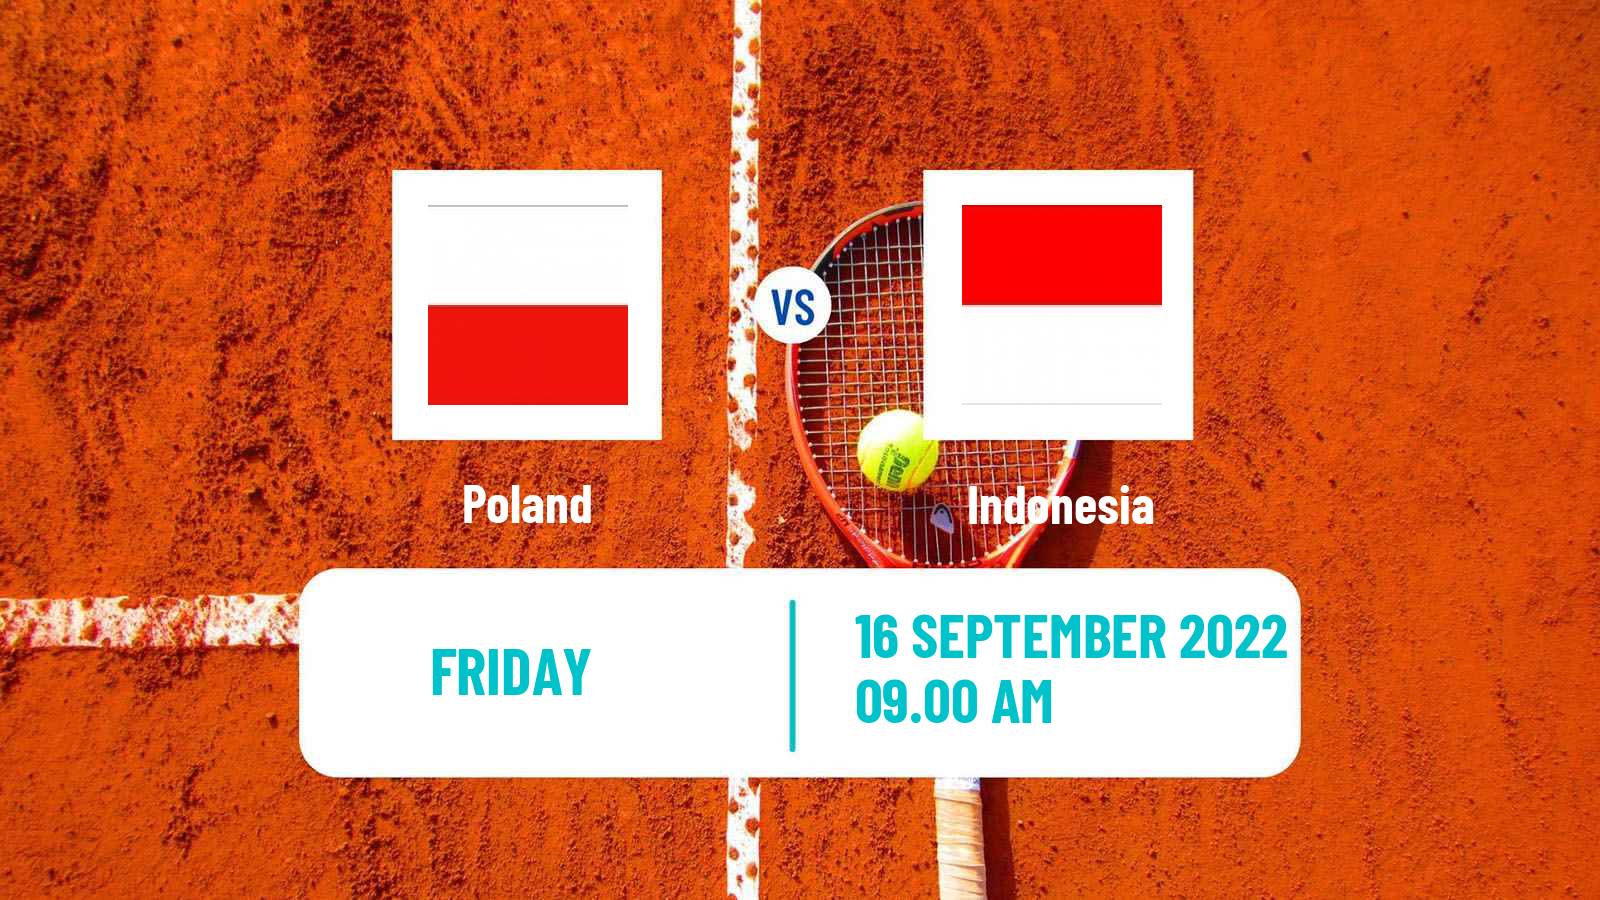 Tennis Davis Cup World Group II Teams Poland - Indonesia